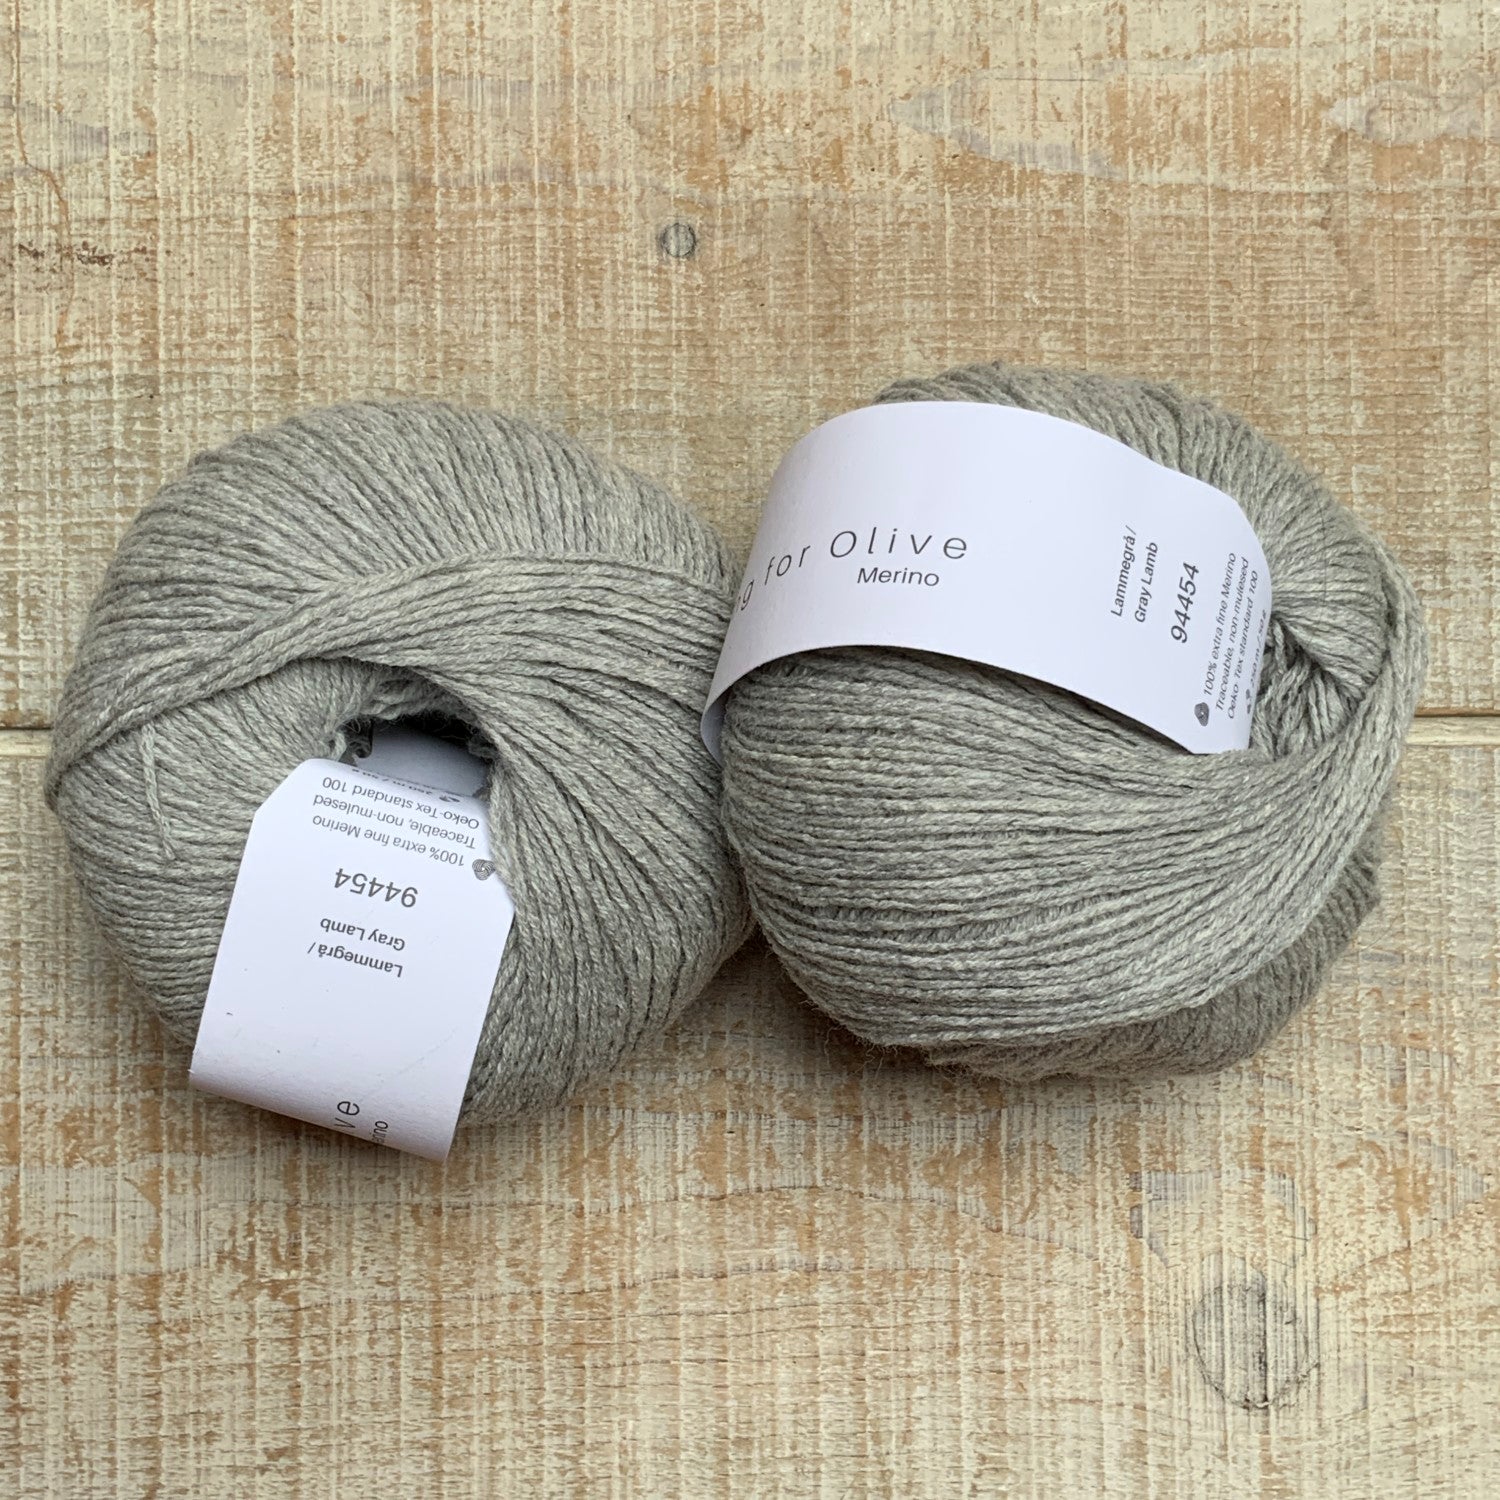 Knitting for Olive  Cotton Merino — Firefly Fiber Arts Studio